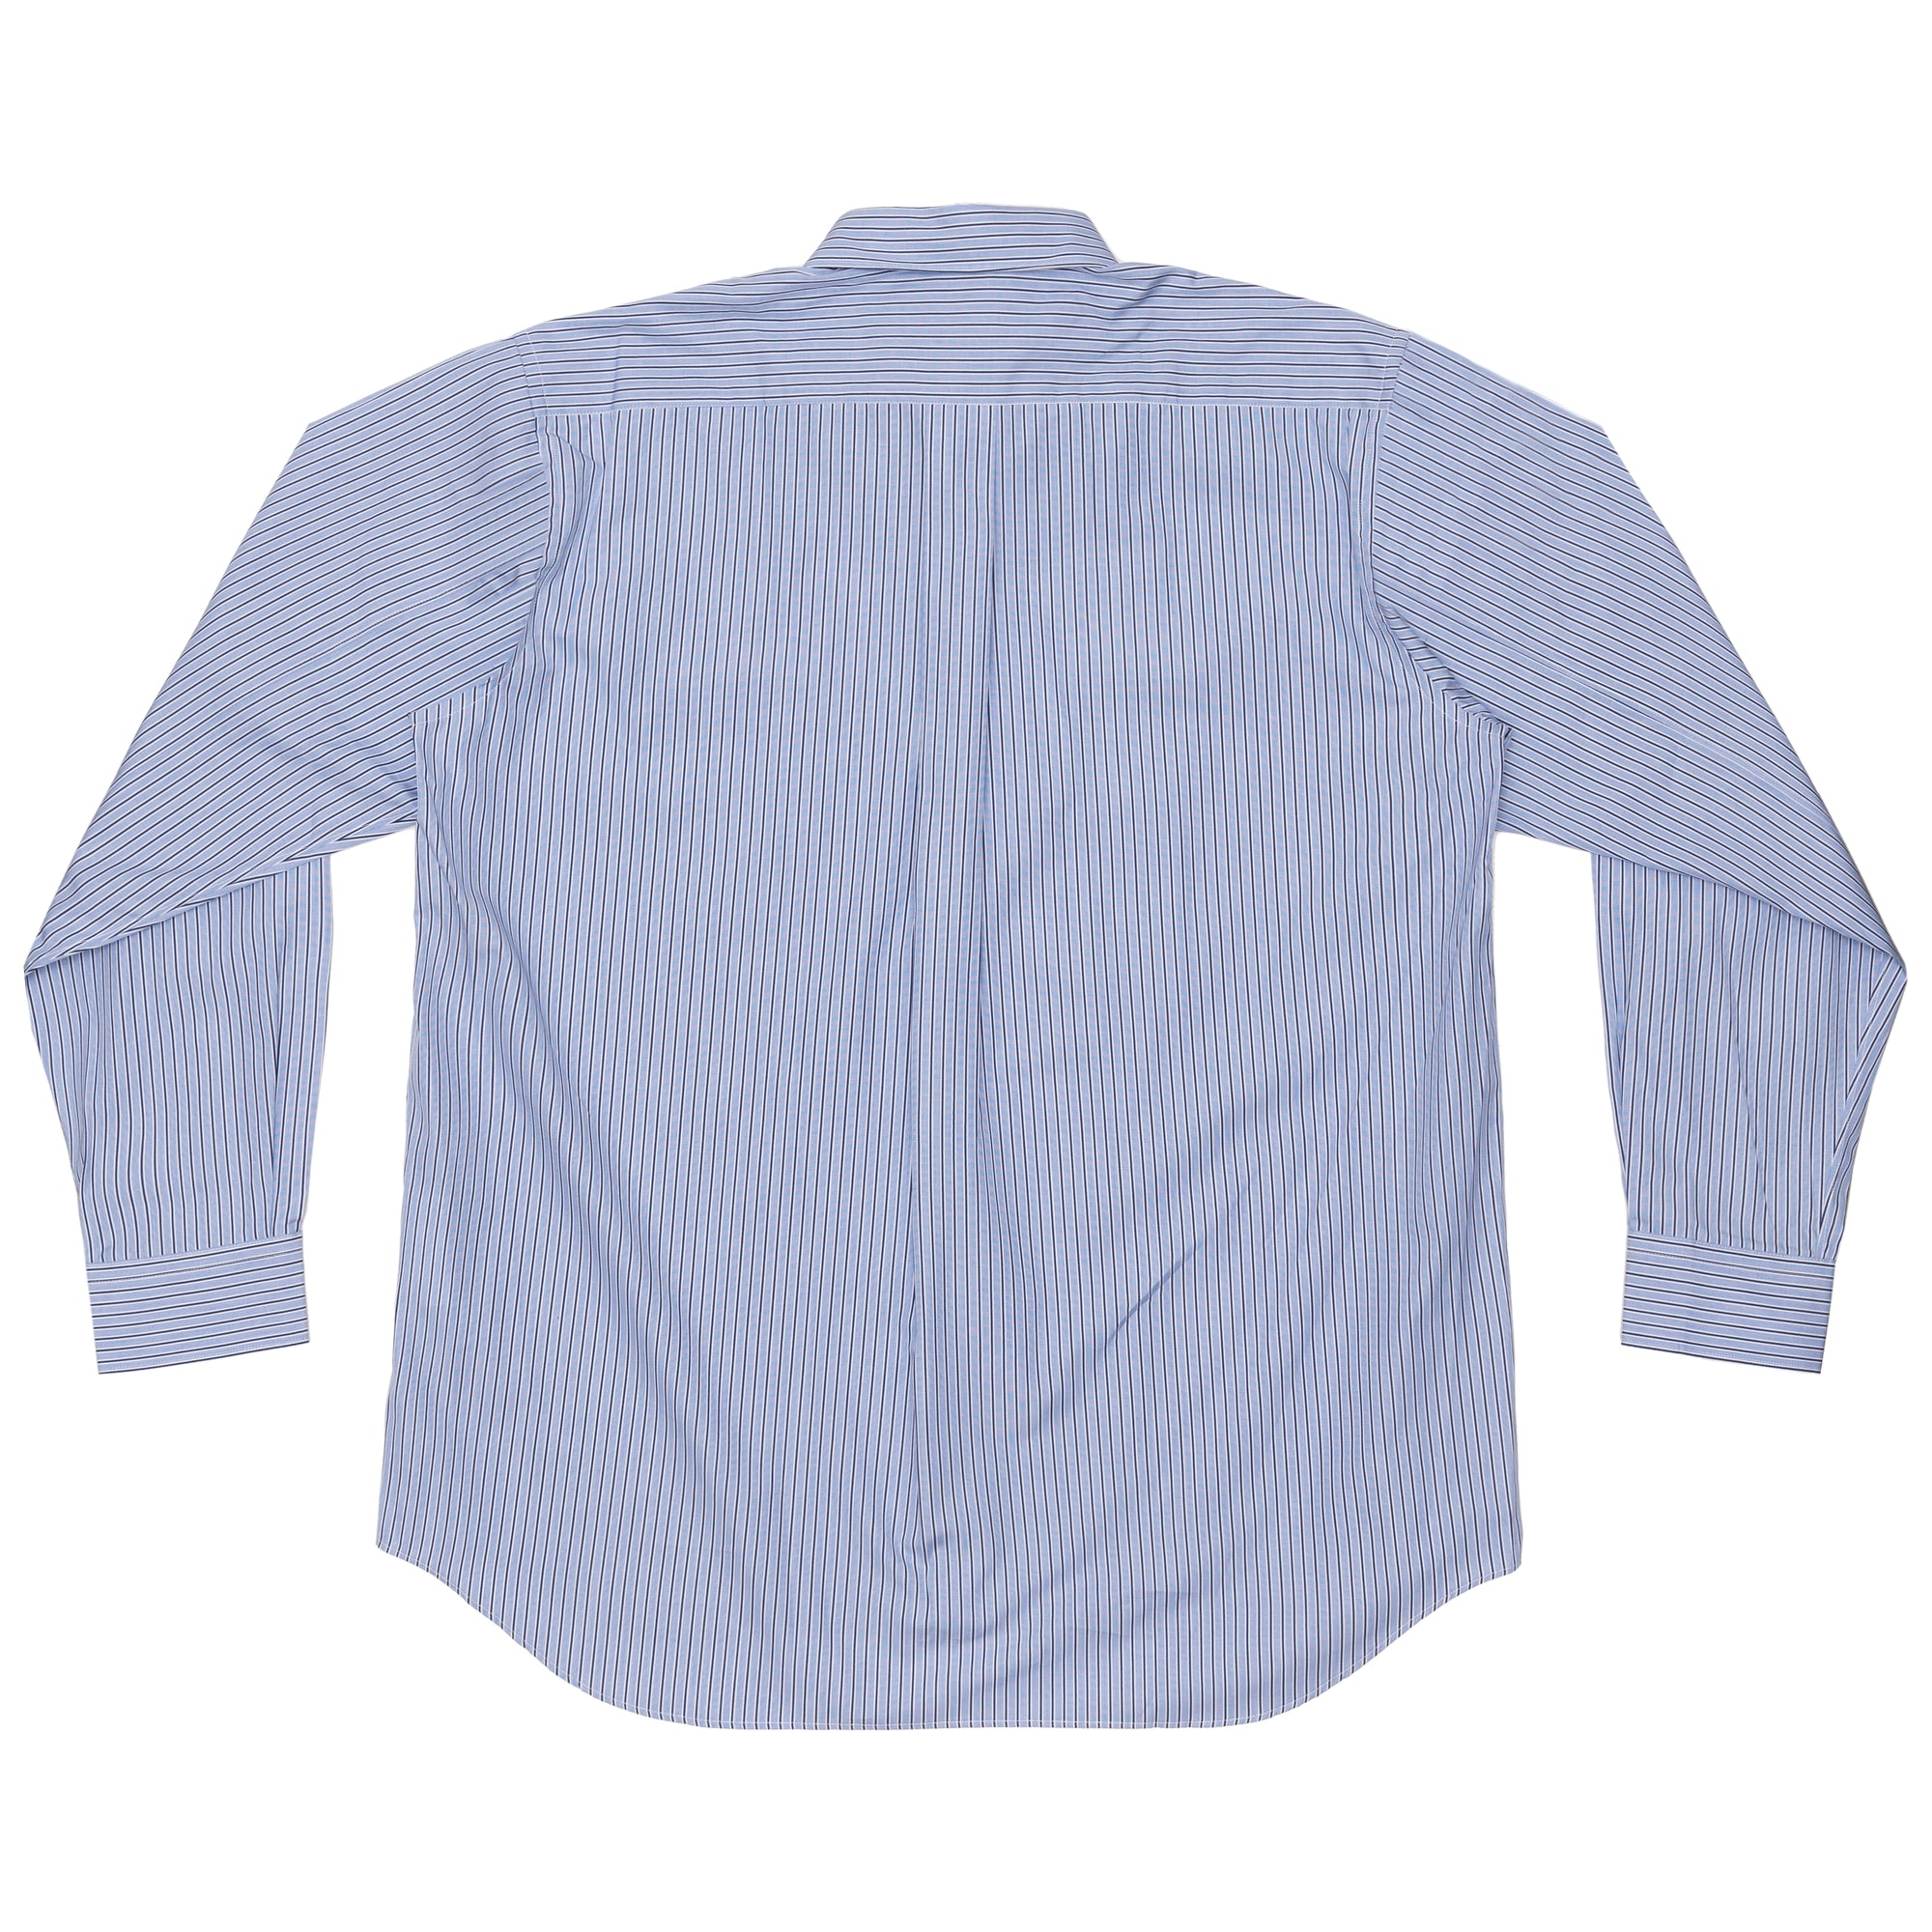 CDG SHIRT FOREVER - Wide Classic Yarn Dyed Cotton Poplin Shirt - (Stripe12) view 2